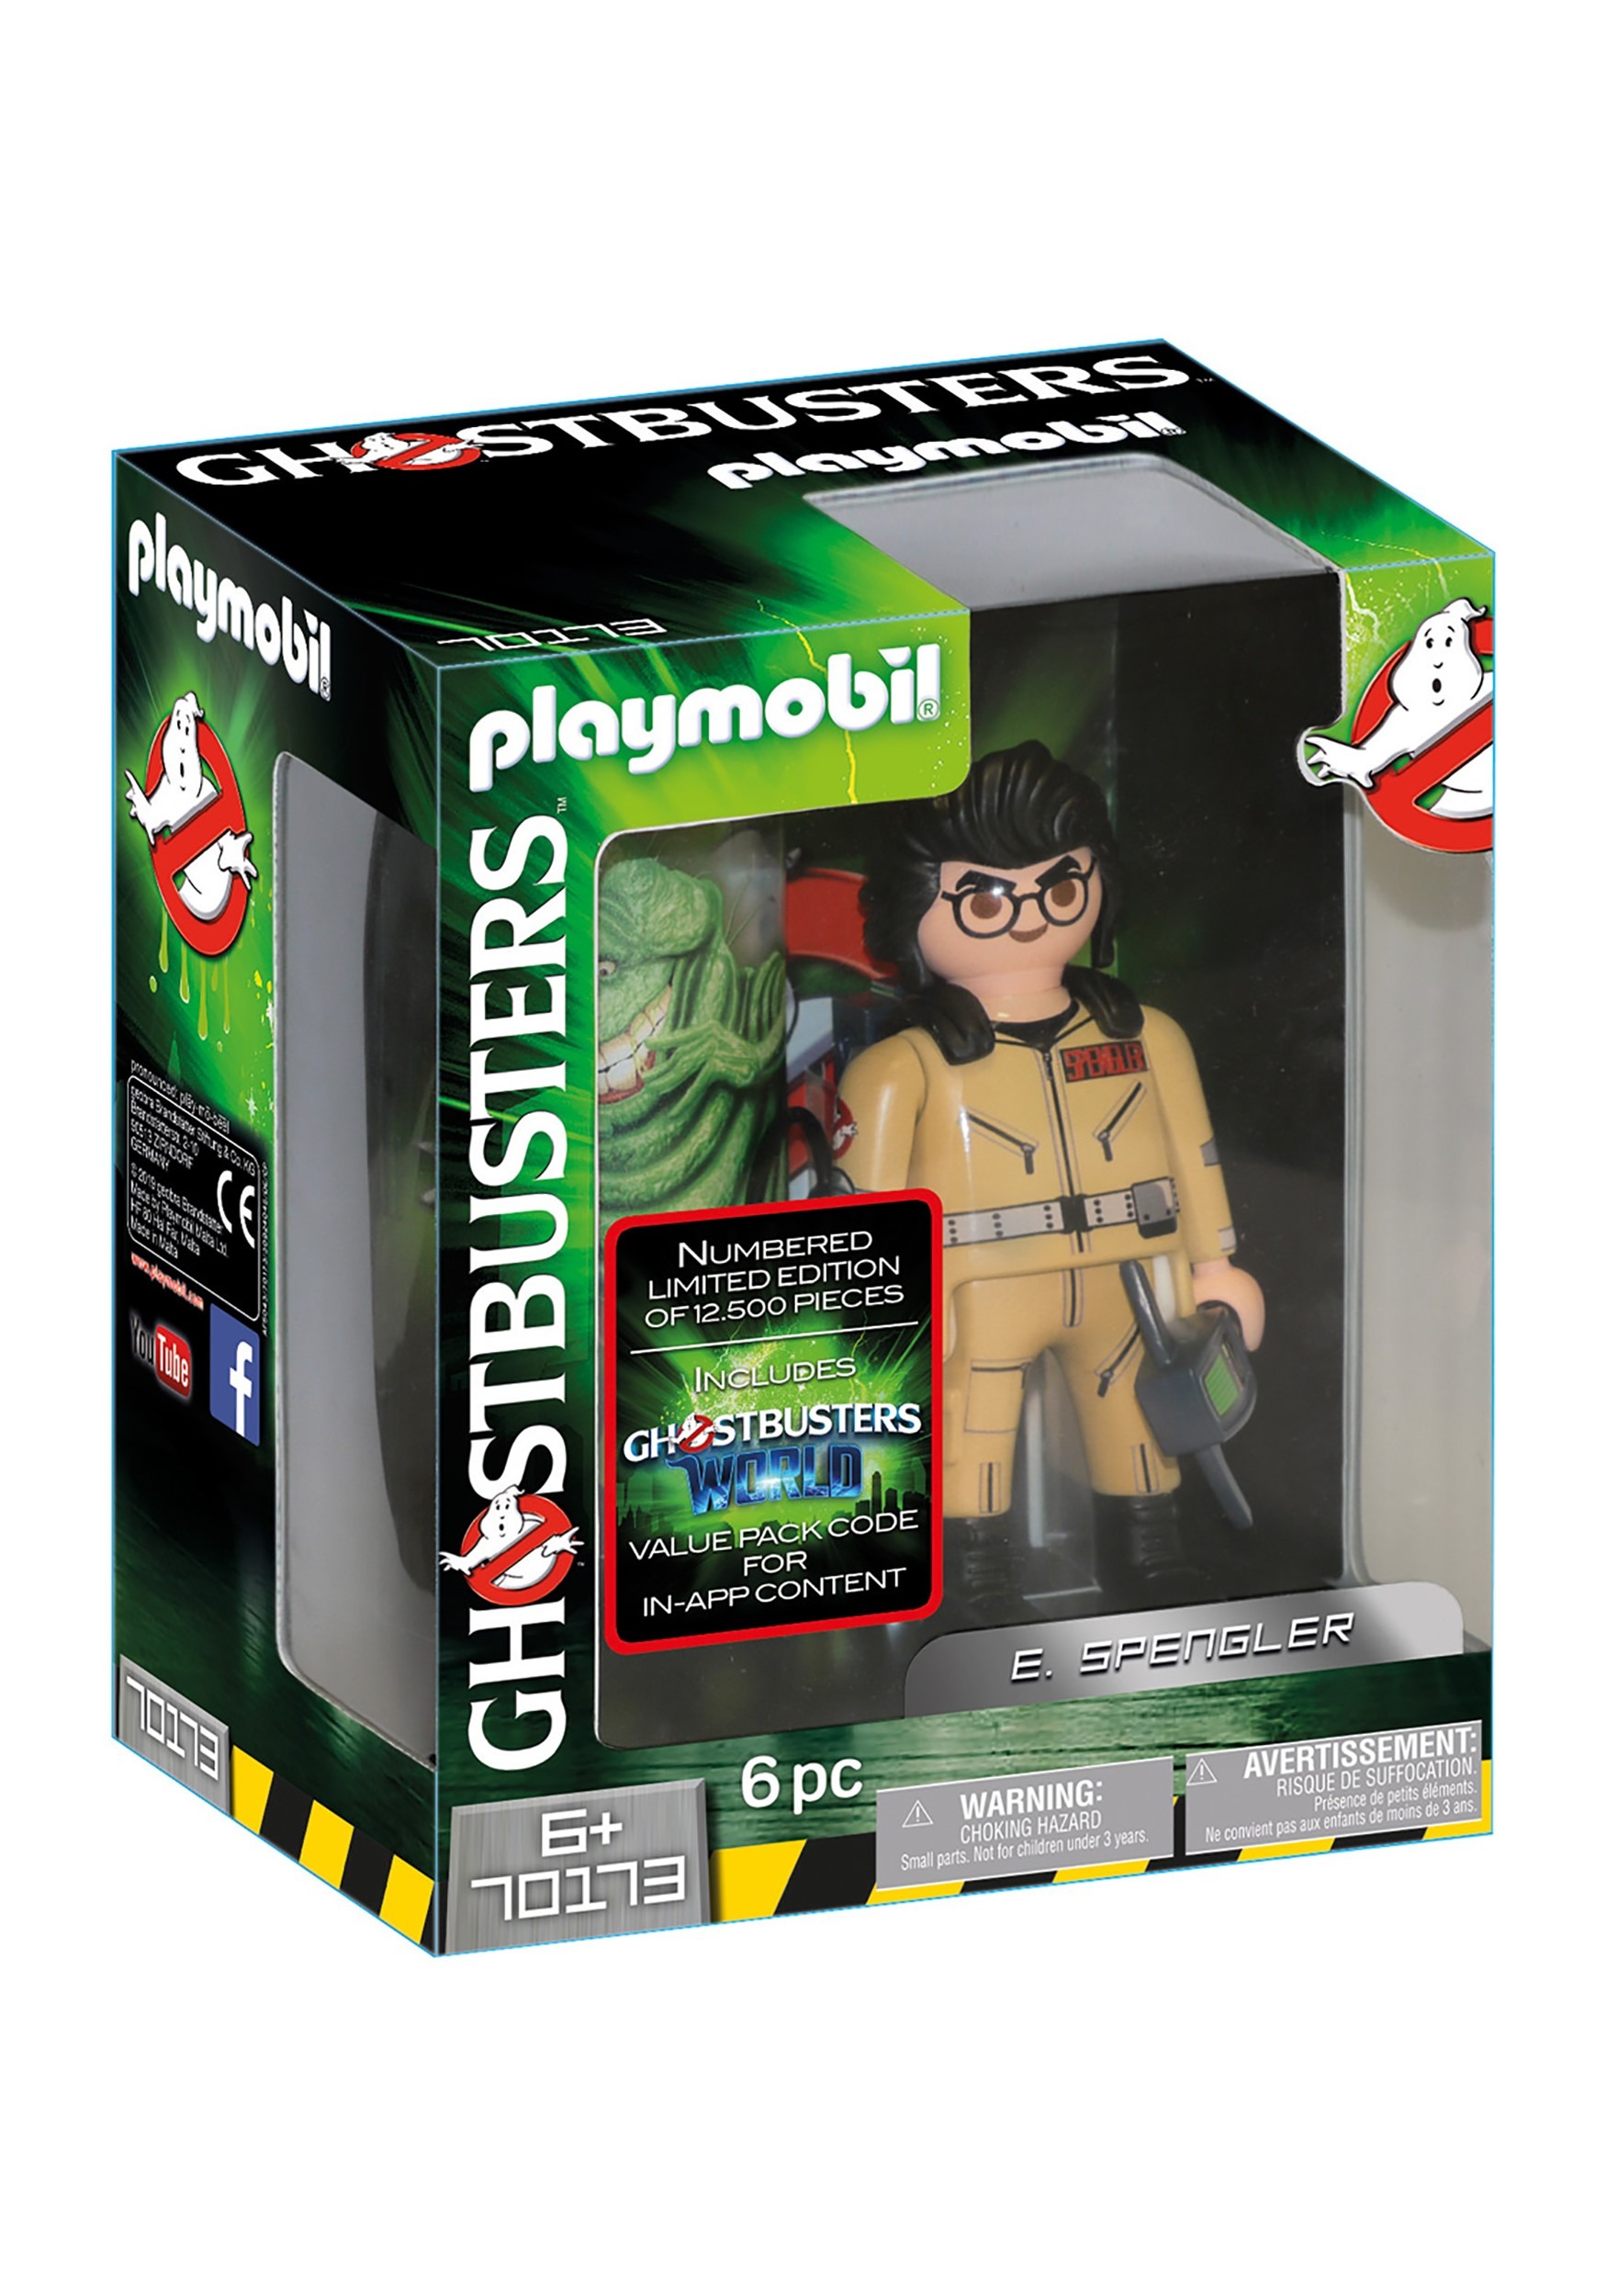 Playmobil Ghostbusters Collector's Edition E. Spengler Figure